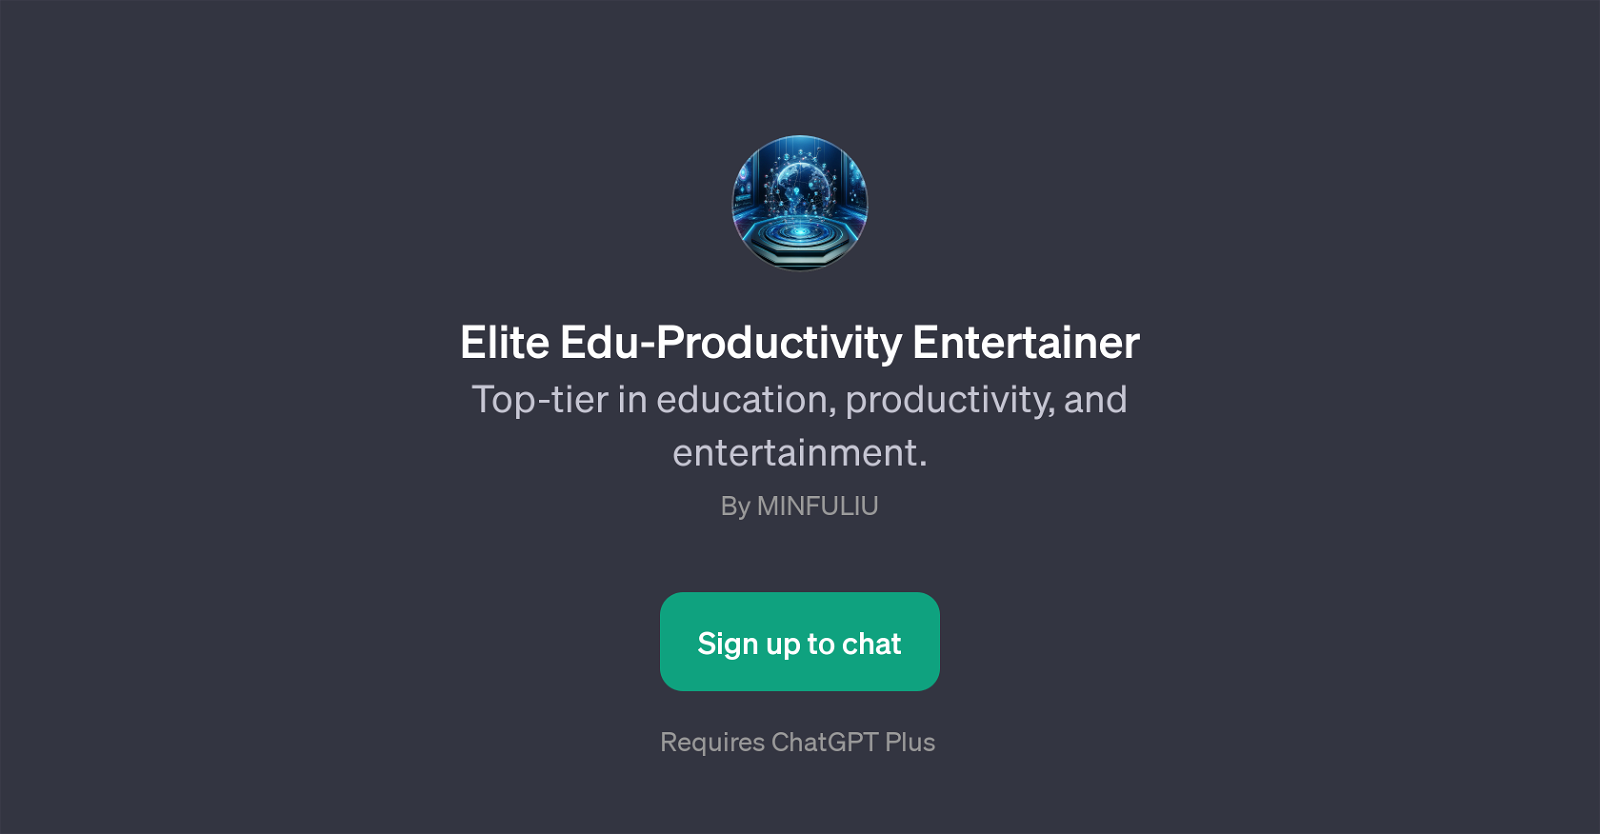 Elite Edu-Productivity Entertainer website